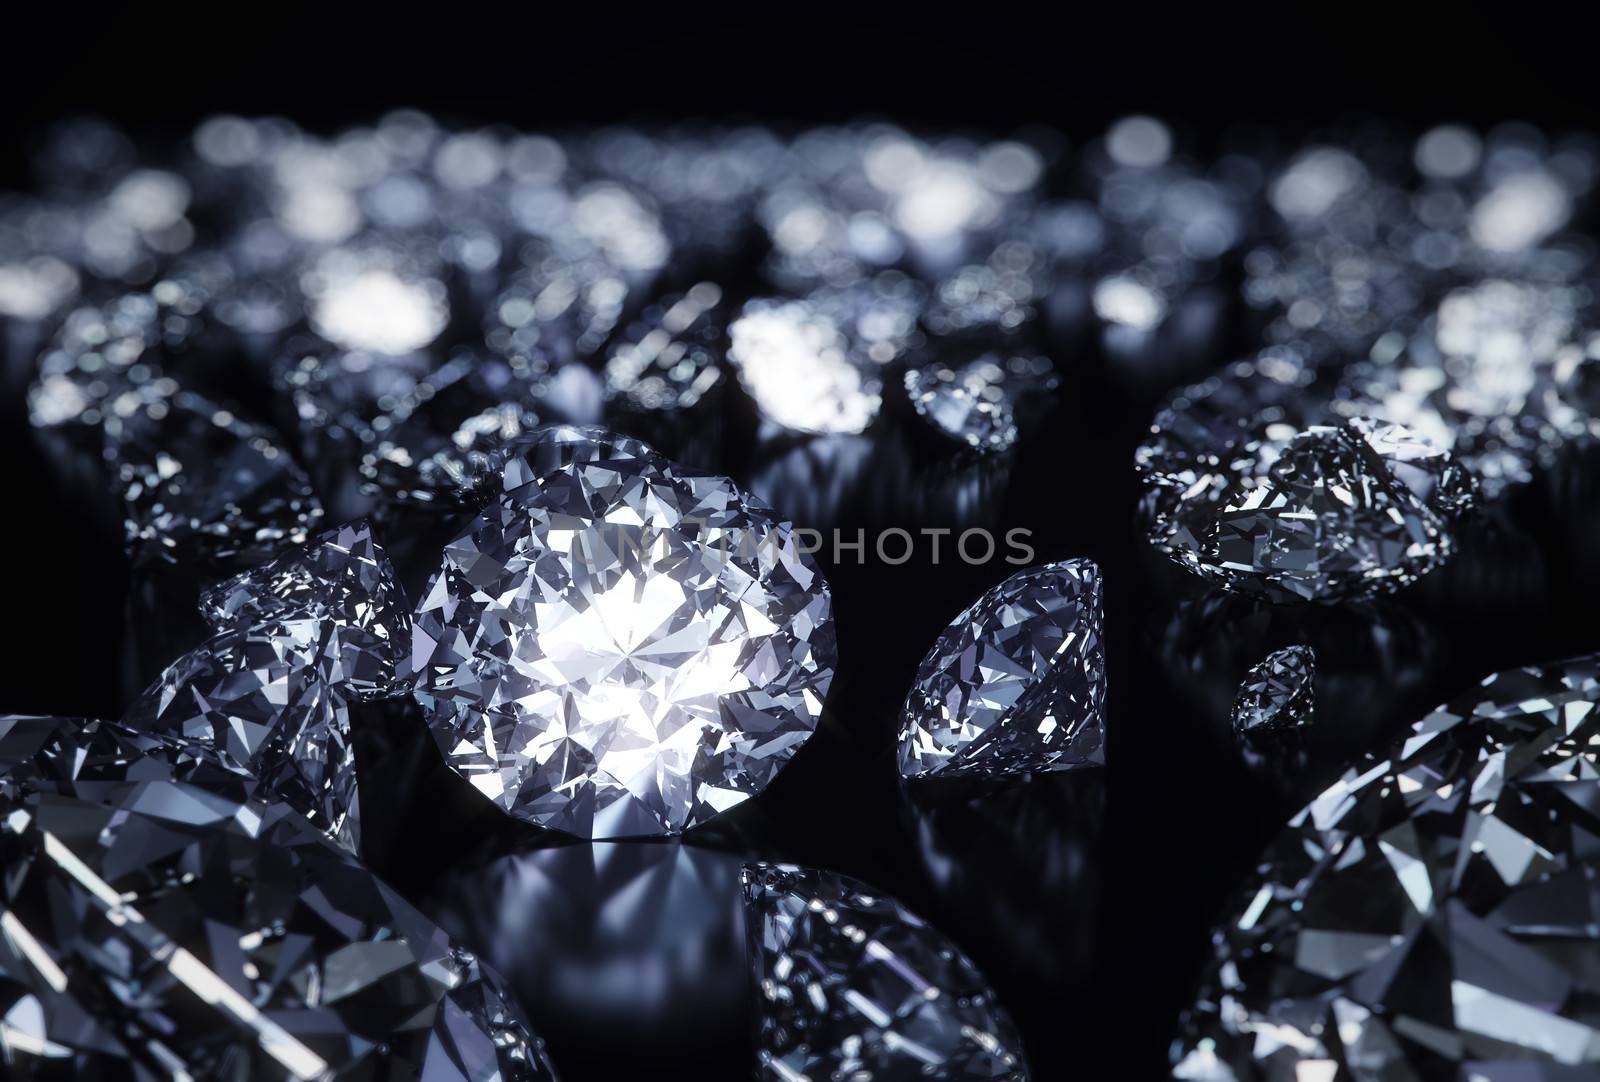 Luxury 3D diamonds render on black backgorund with DOF